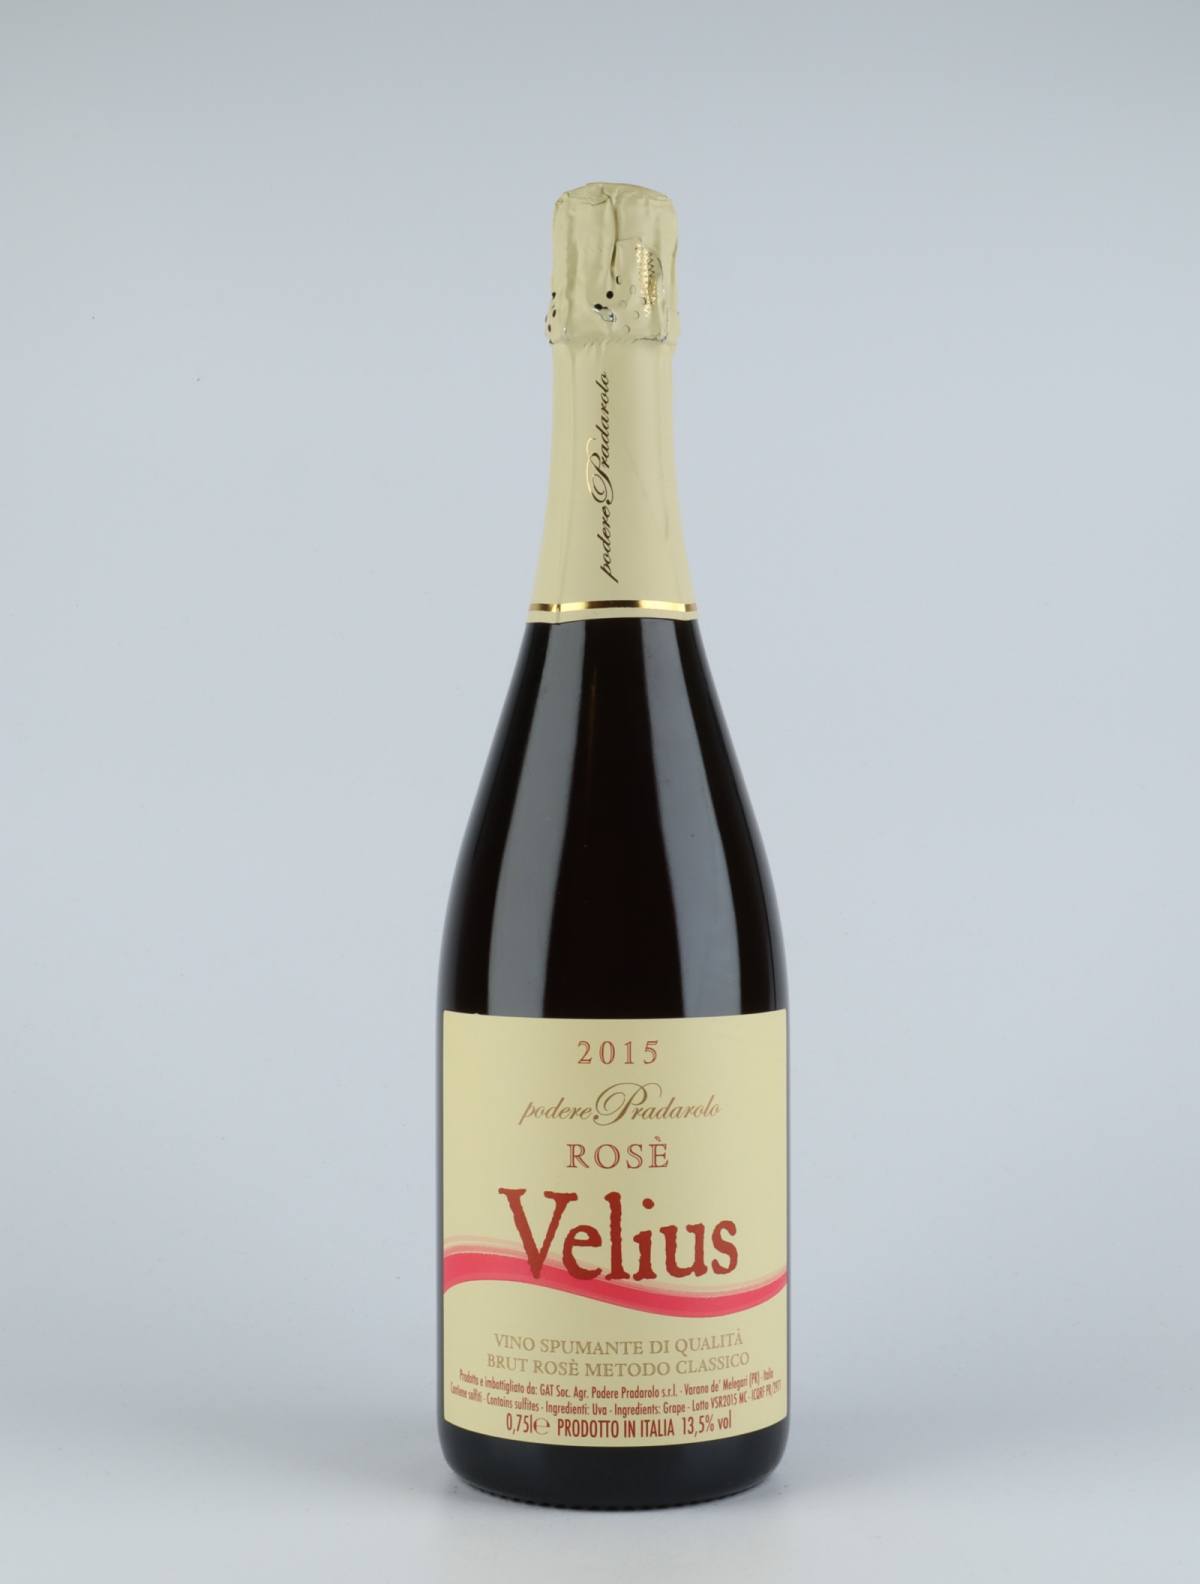 A bottle 2015 Velius Rosé Metodo Classico Sparkling from Podere Pradarolo, Emilia-Romagna in Italy